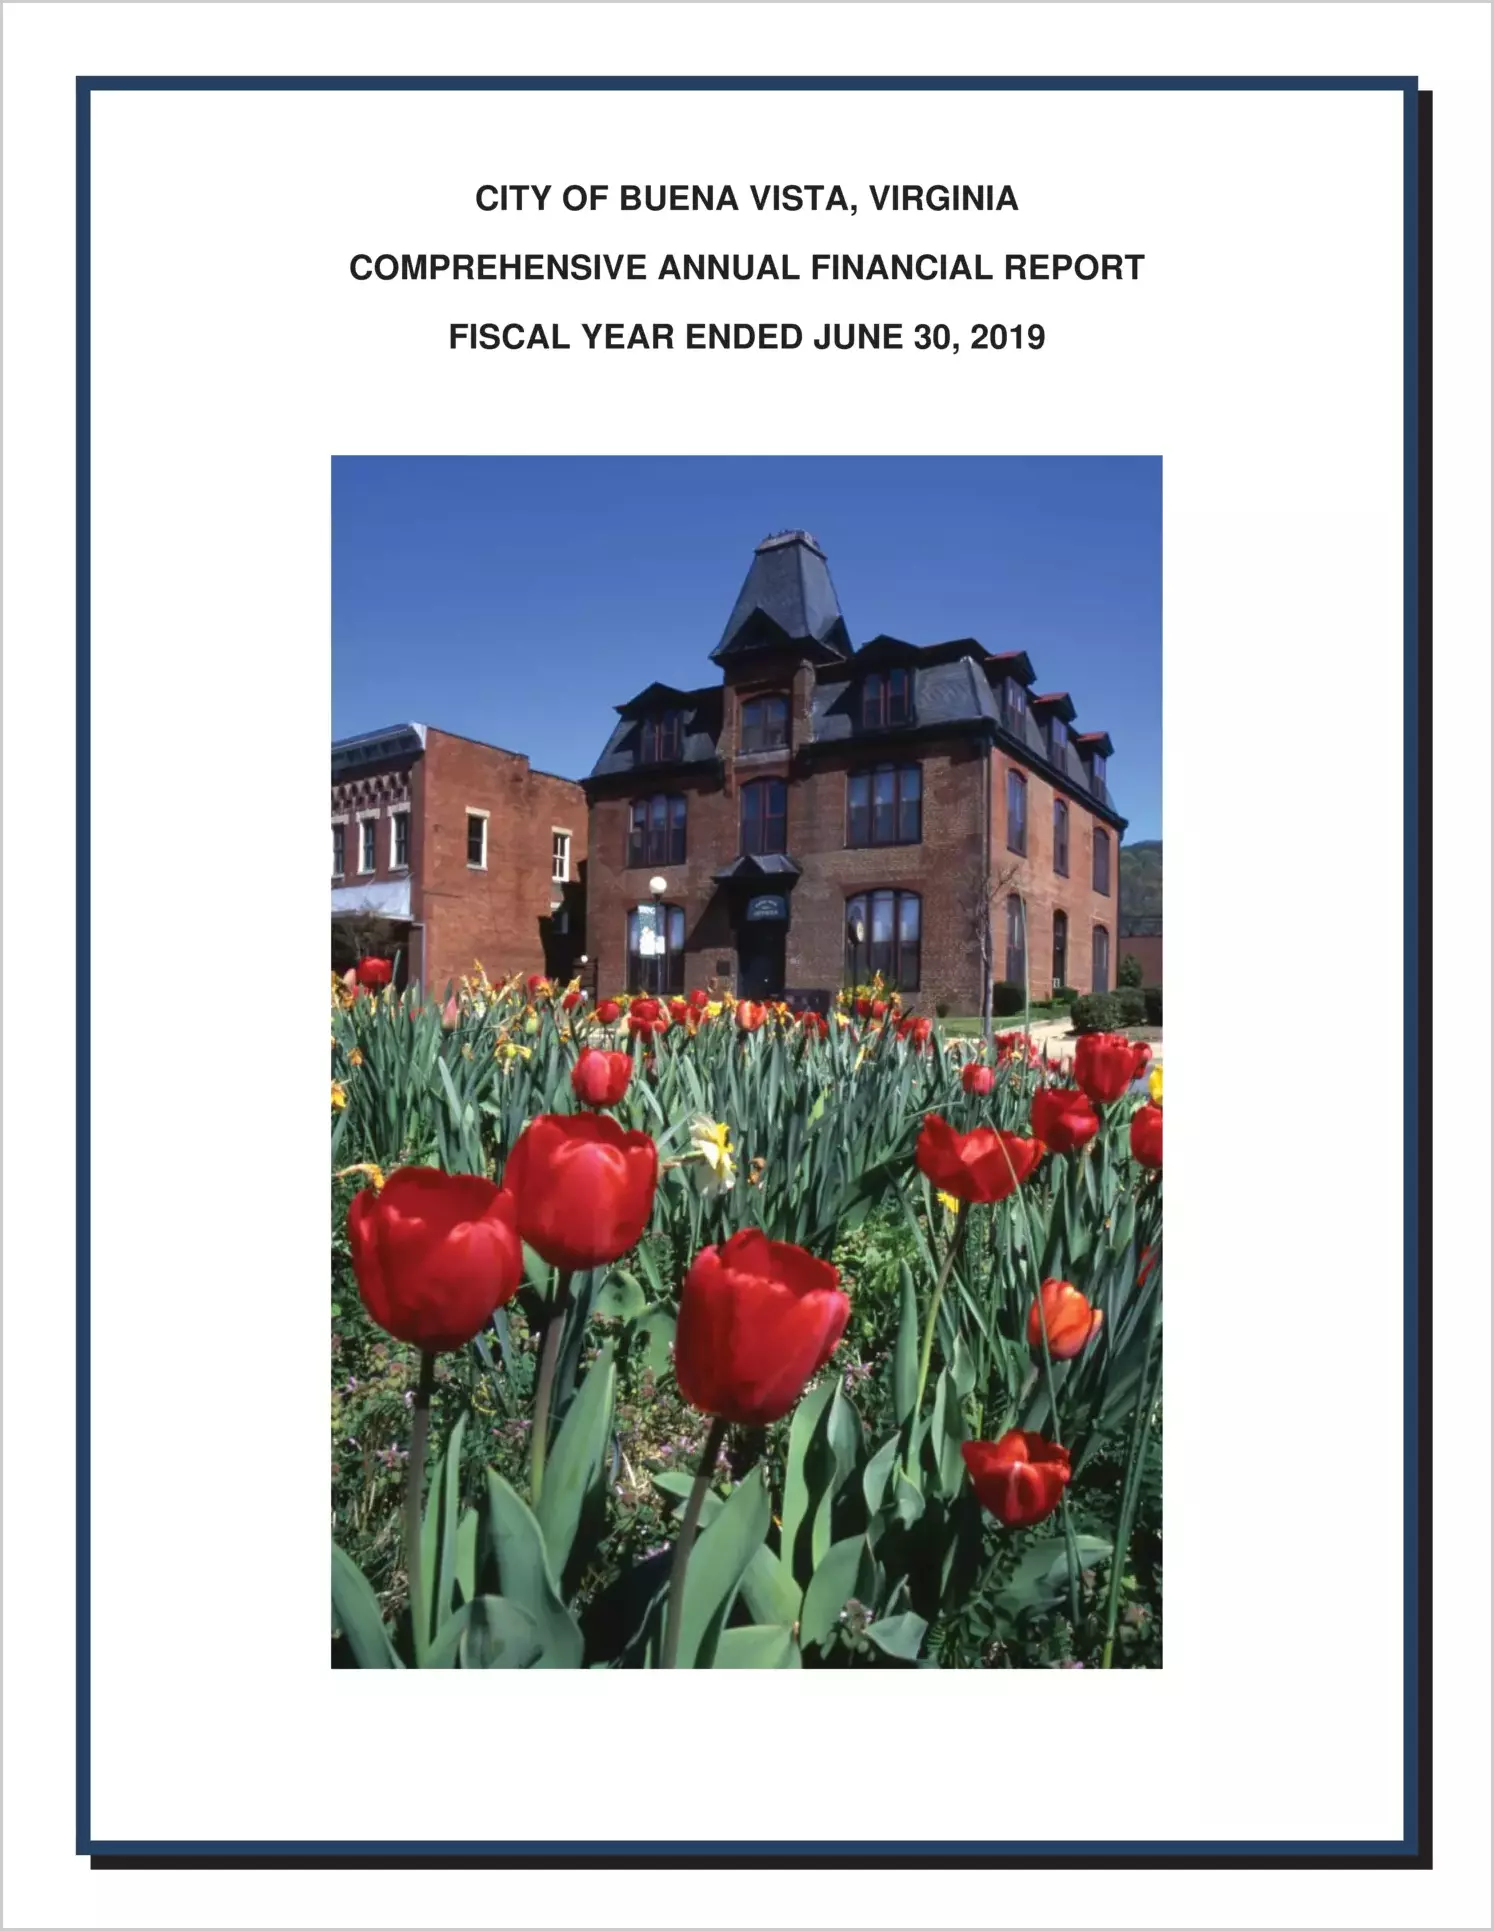 2019 Annual Financial Report for City of Buena Vista